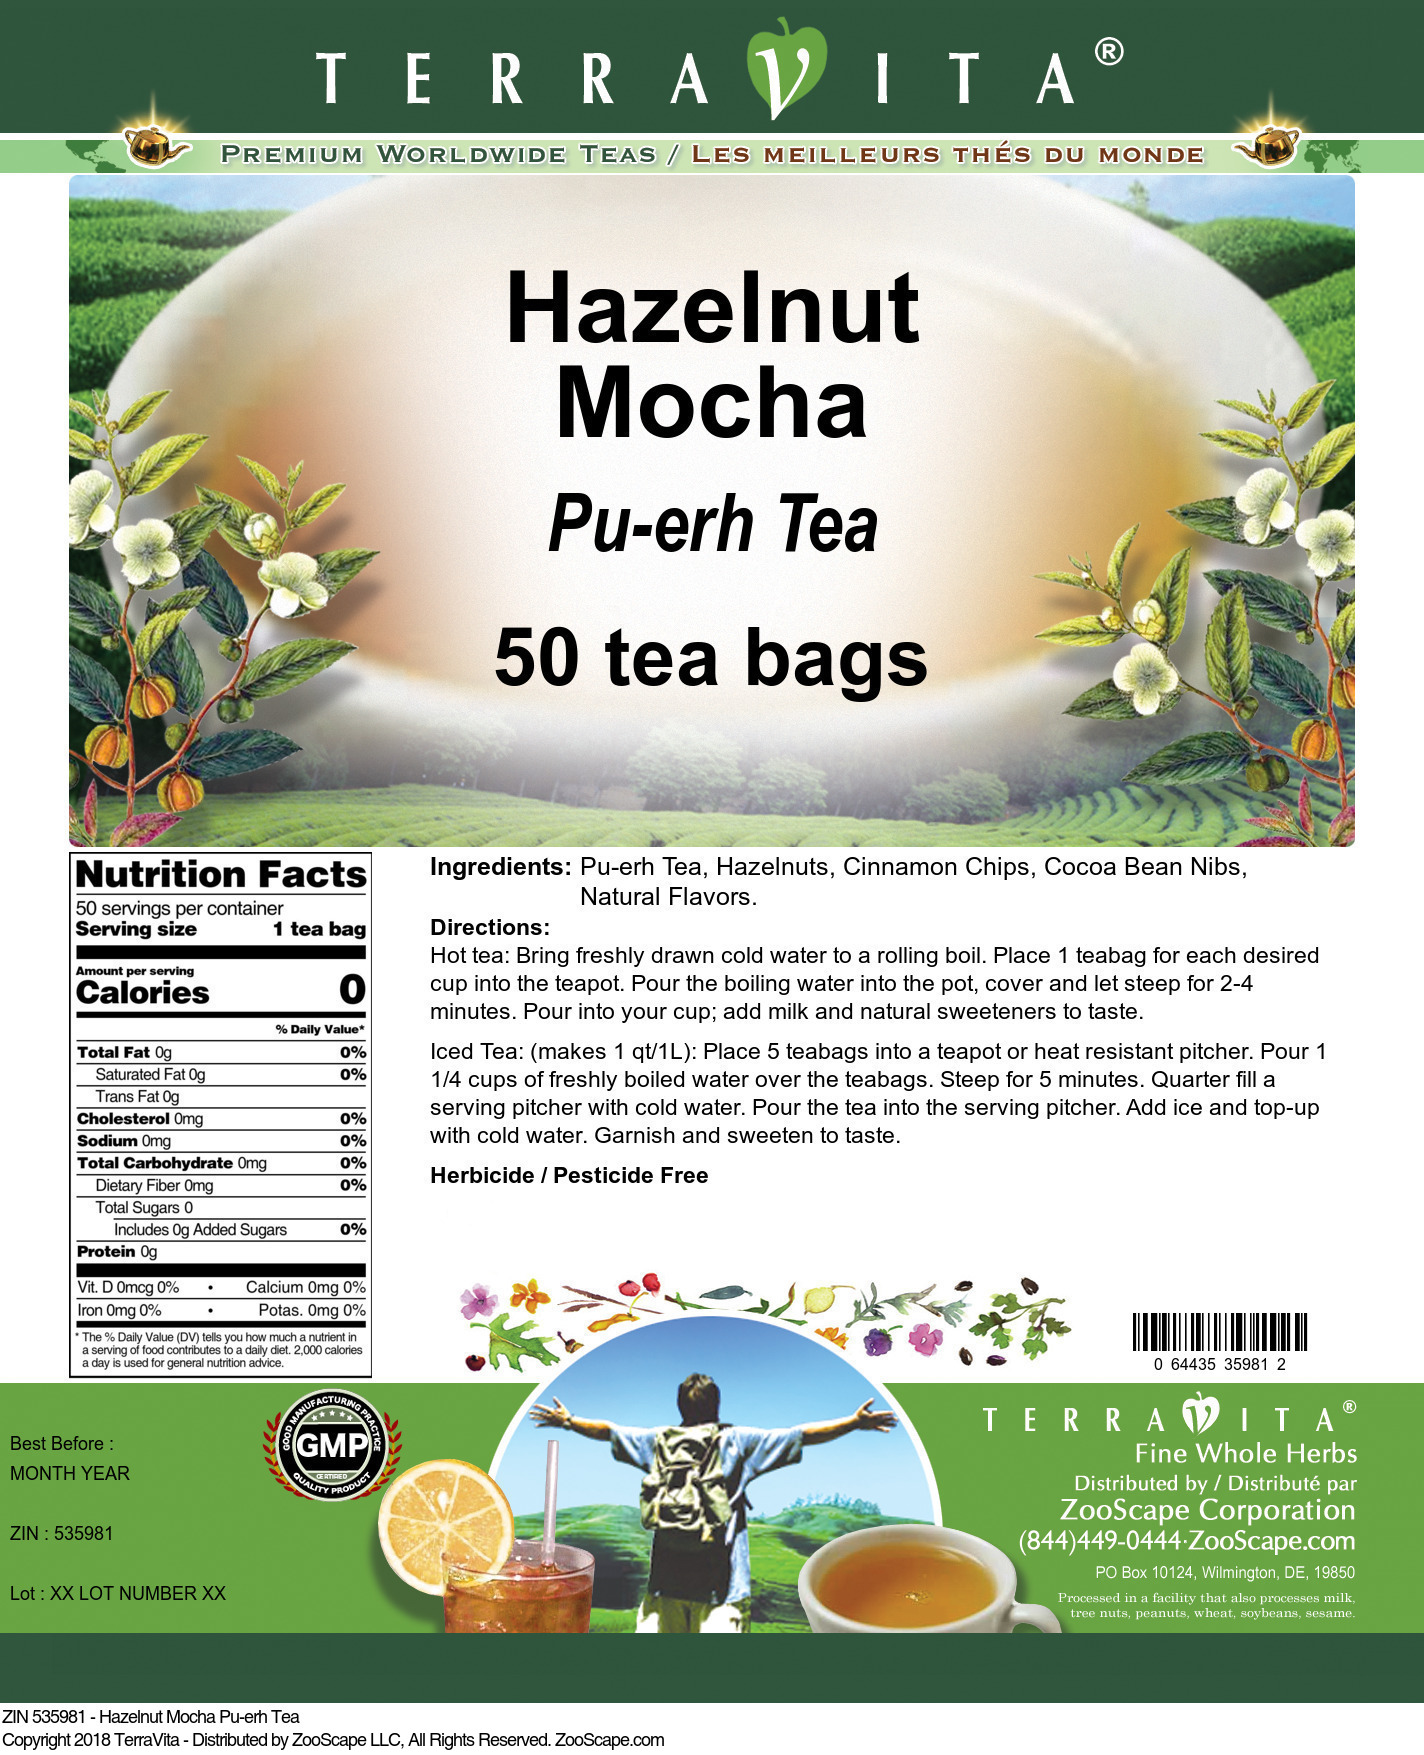 Hazelnut Mocha Pu-erh Tea - Label